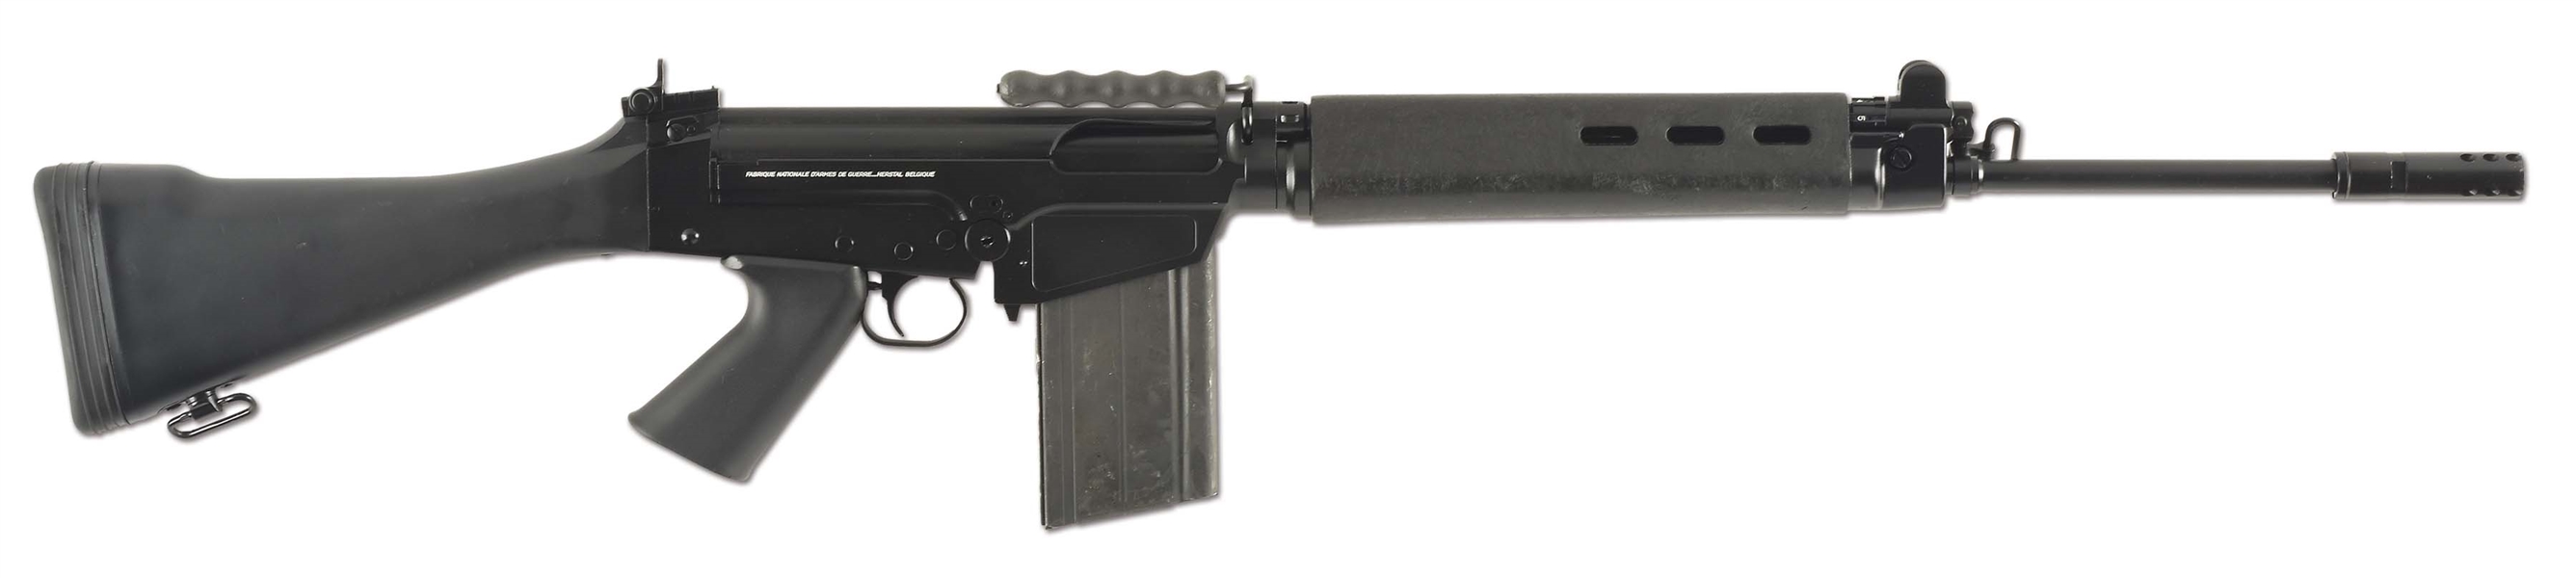 (N) MAGNIFICENT ORIGINAL LOW SERIAL NUMBER FN HERSTAL FN-FAL 1964 MANUFACTURED MACHINE GUN (CURIO & RELIC).